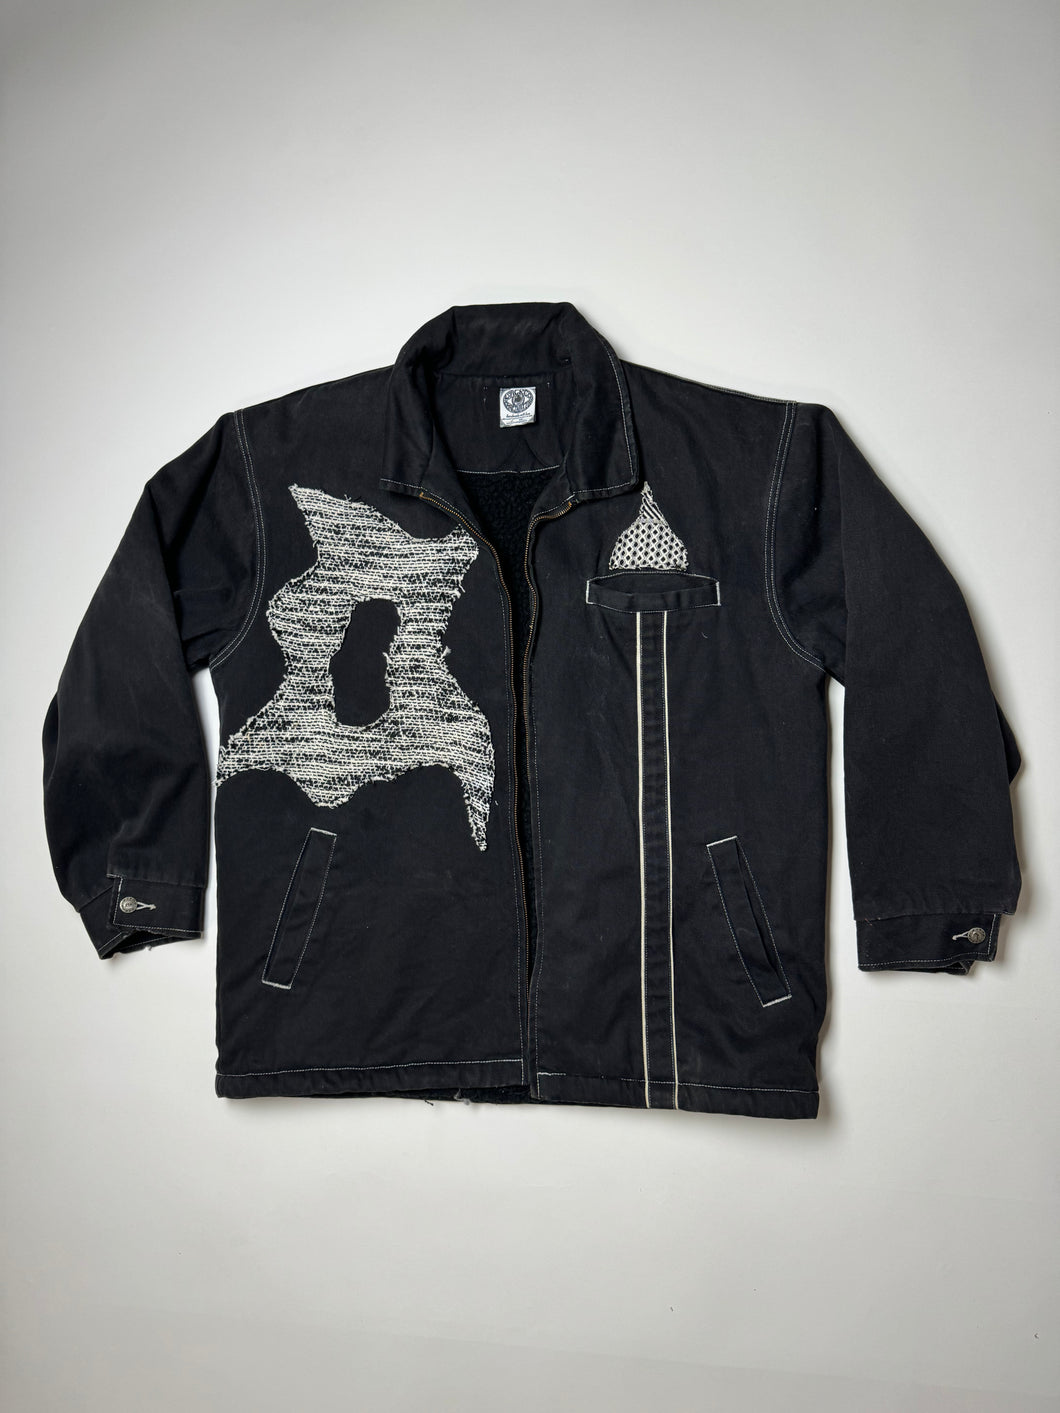 “Evolve” Sherpa Lined Jacket